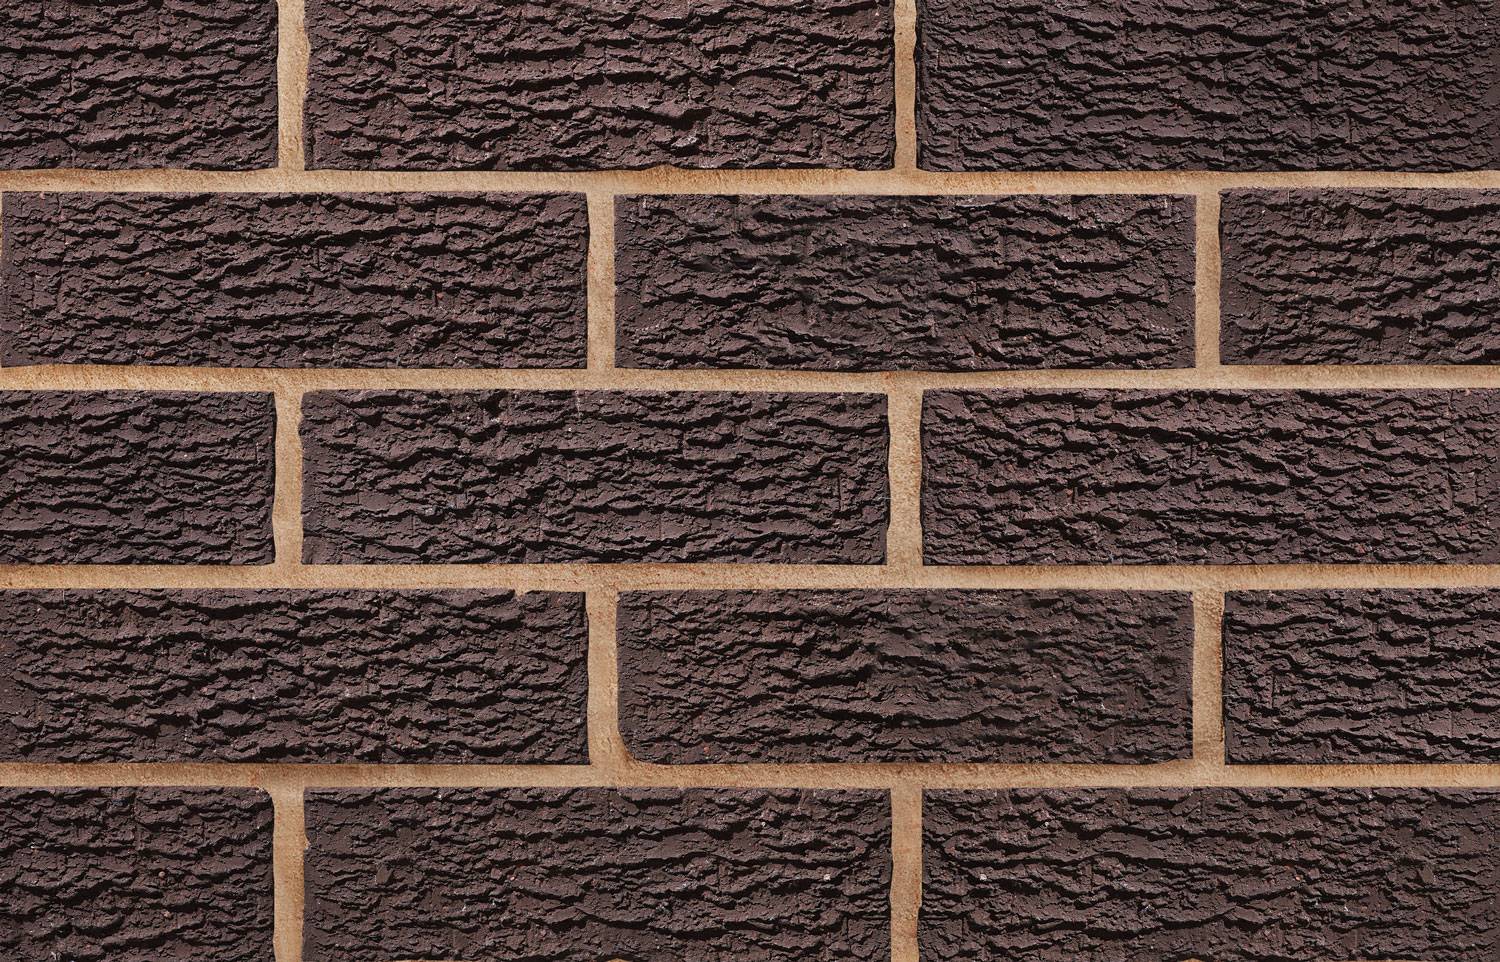 Carlton Brown Rustic Clay Brick